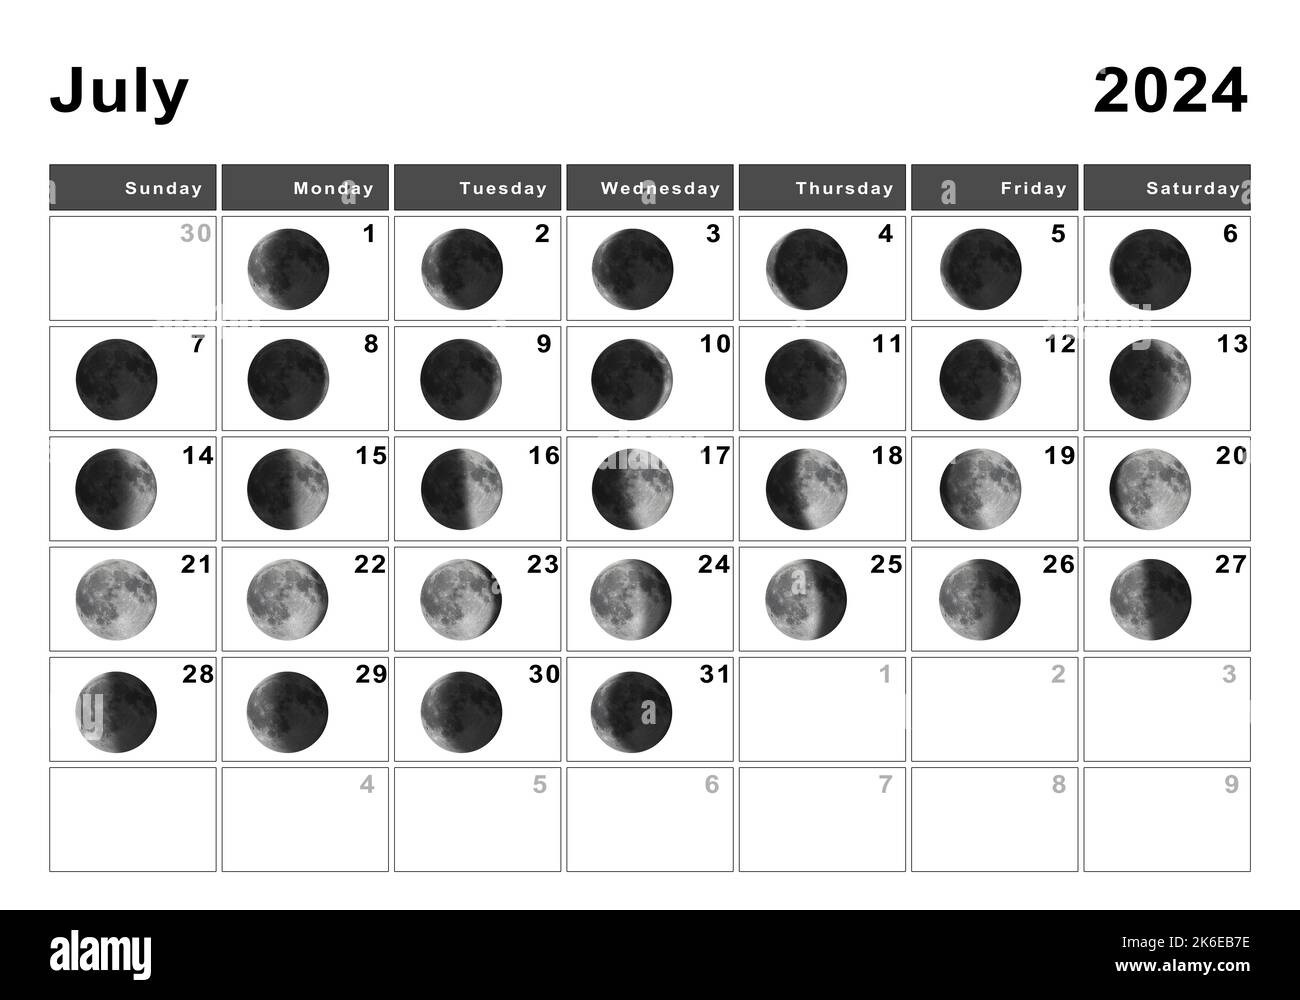 July 2024 Lunar Calendar, Moon Cycles, Moon Phases Stock Photo - Alamy | 2024 July Moon Calendar